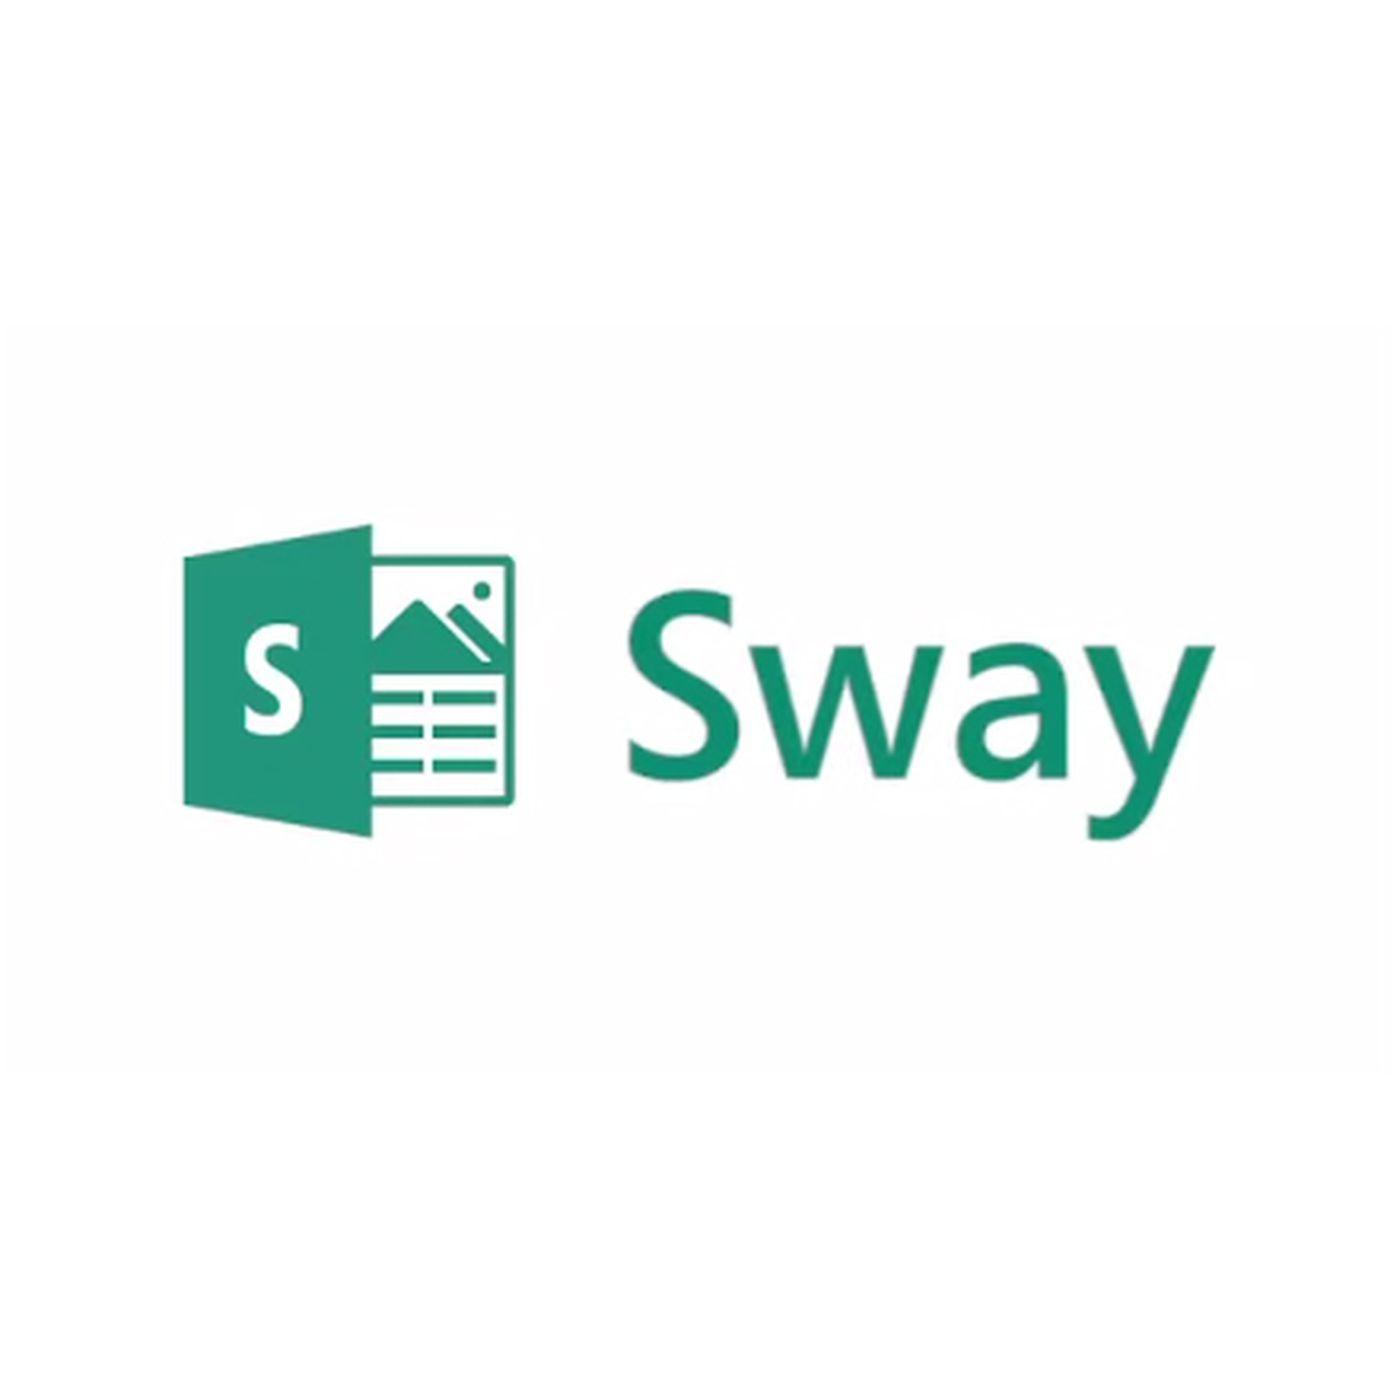 Microsoft Sway Logo - Microsoft's new Sway app is a tool to build elegant websites - The Verge